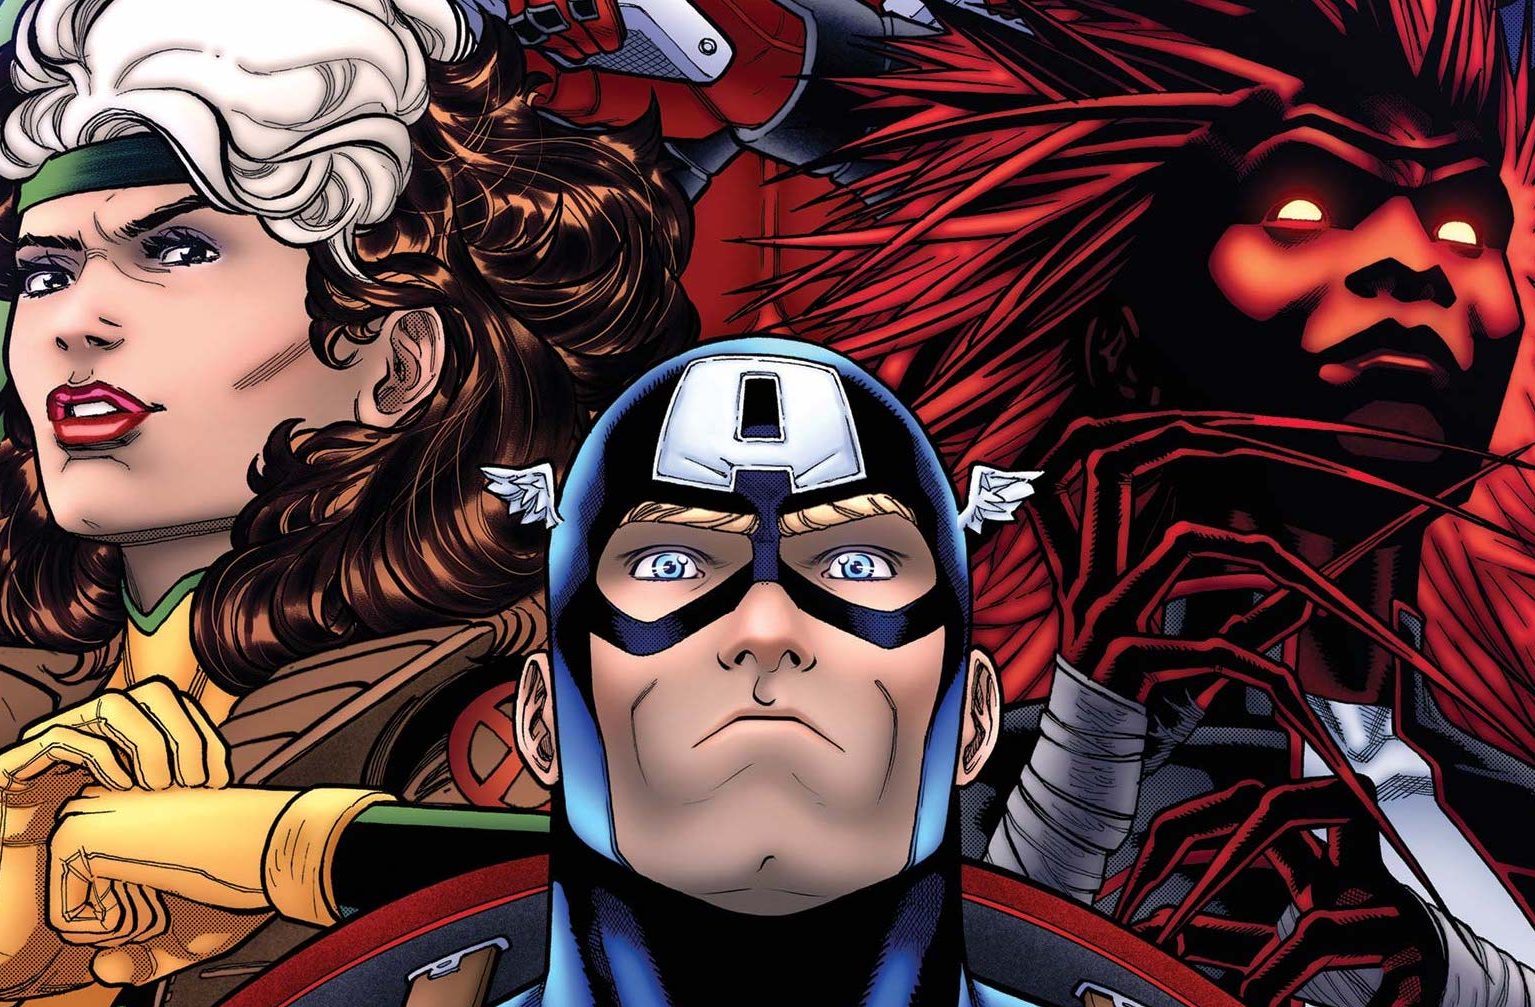 'Uncanny Avengers' #1 is adrenaline-charged superhero comics